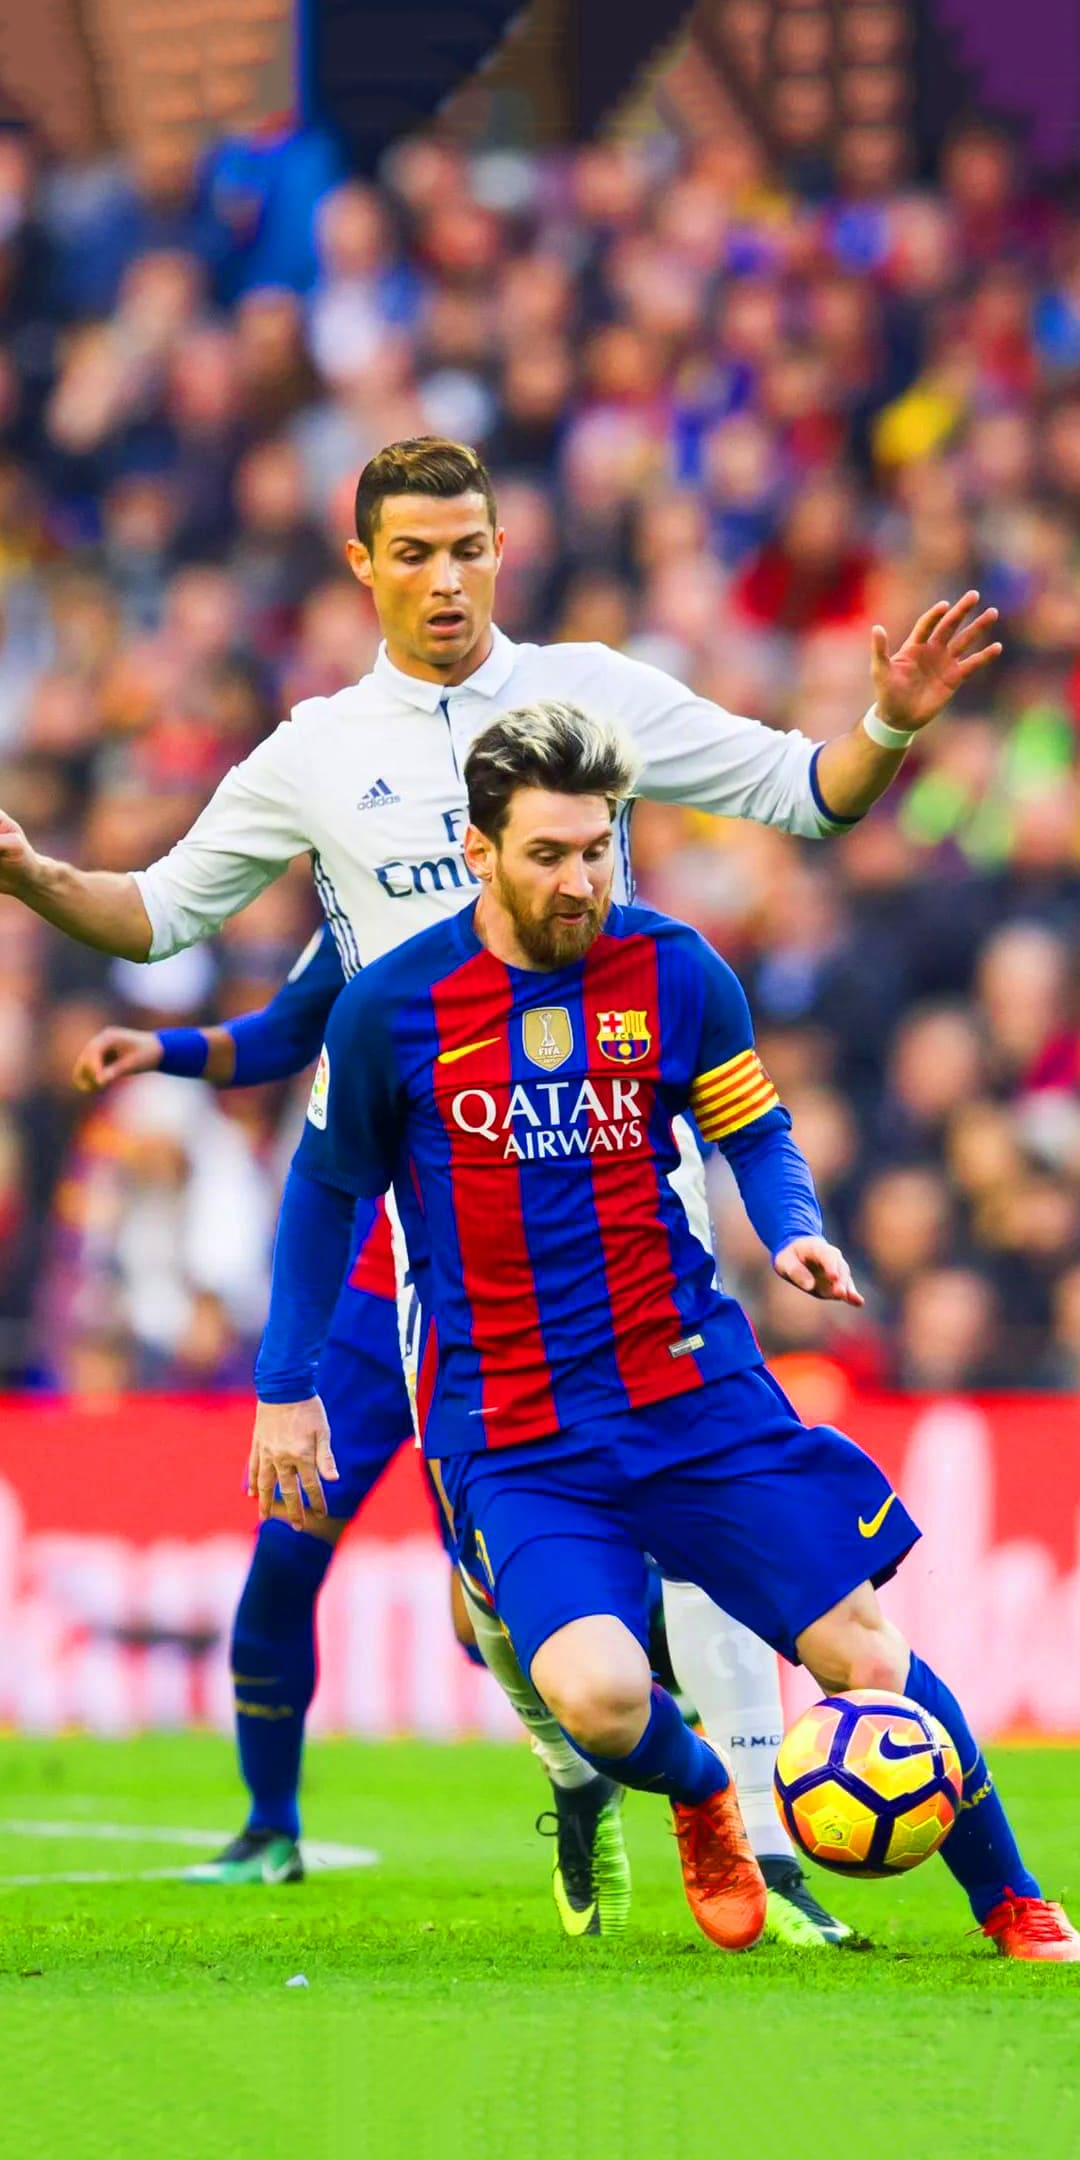 Ronaldo and Messi Wallpapers